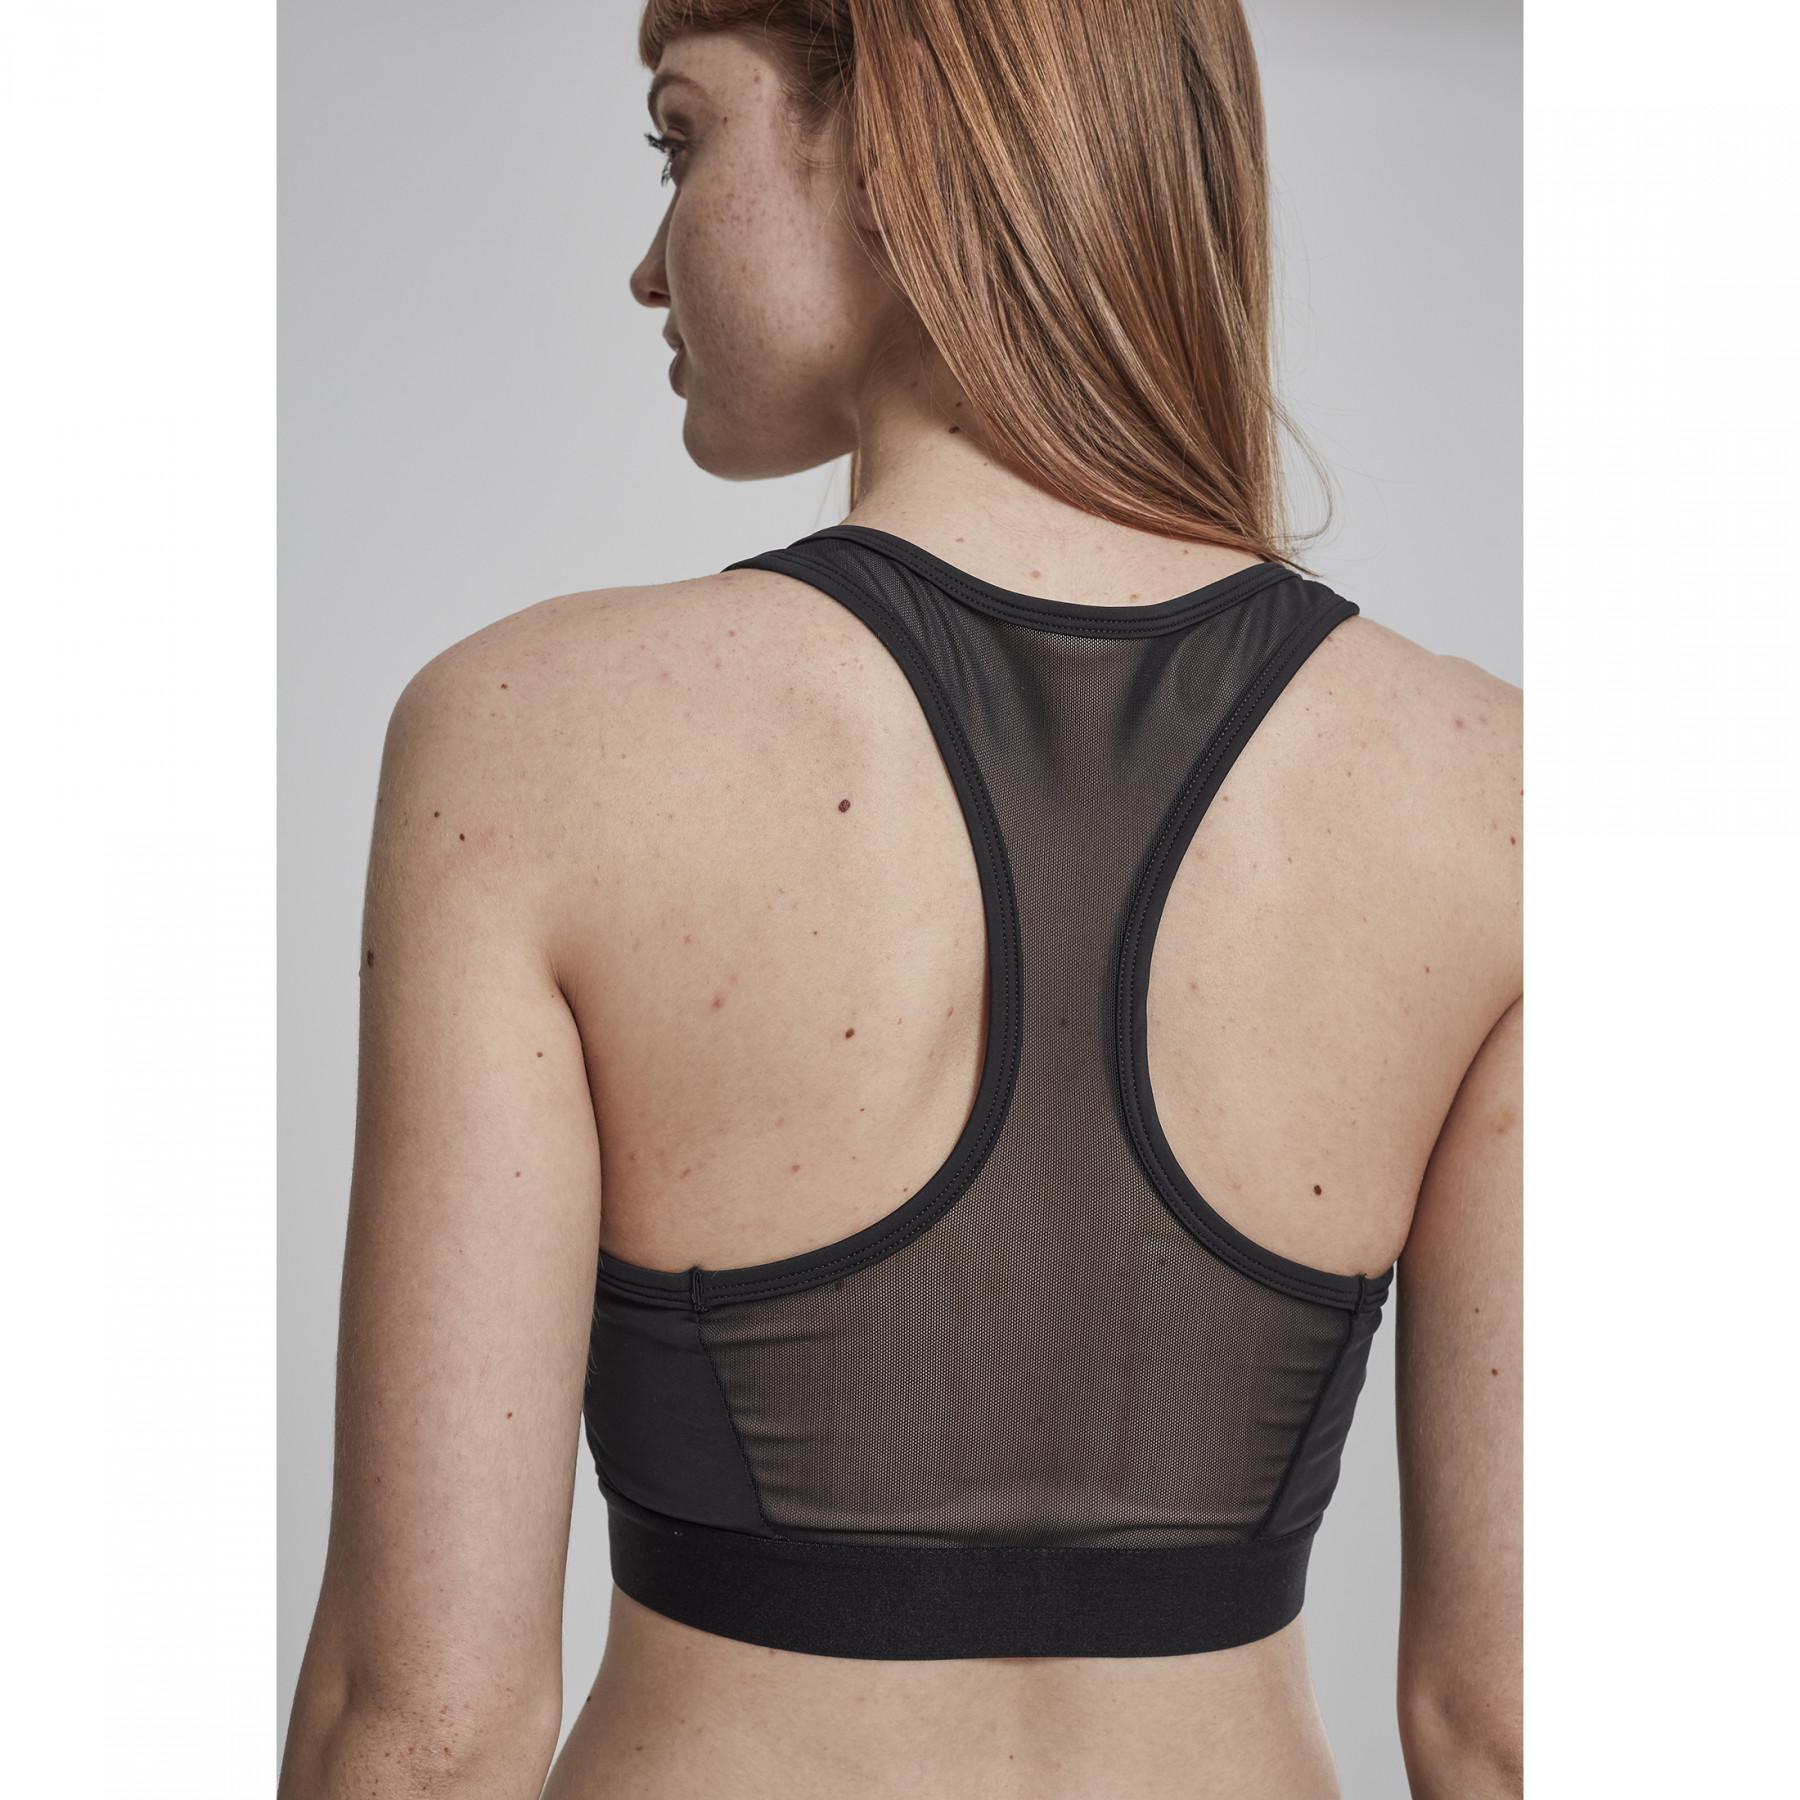 Women's Urban Classic mesh zipped bra